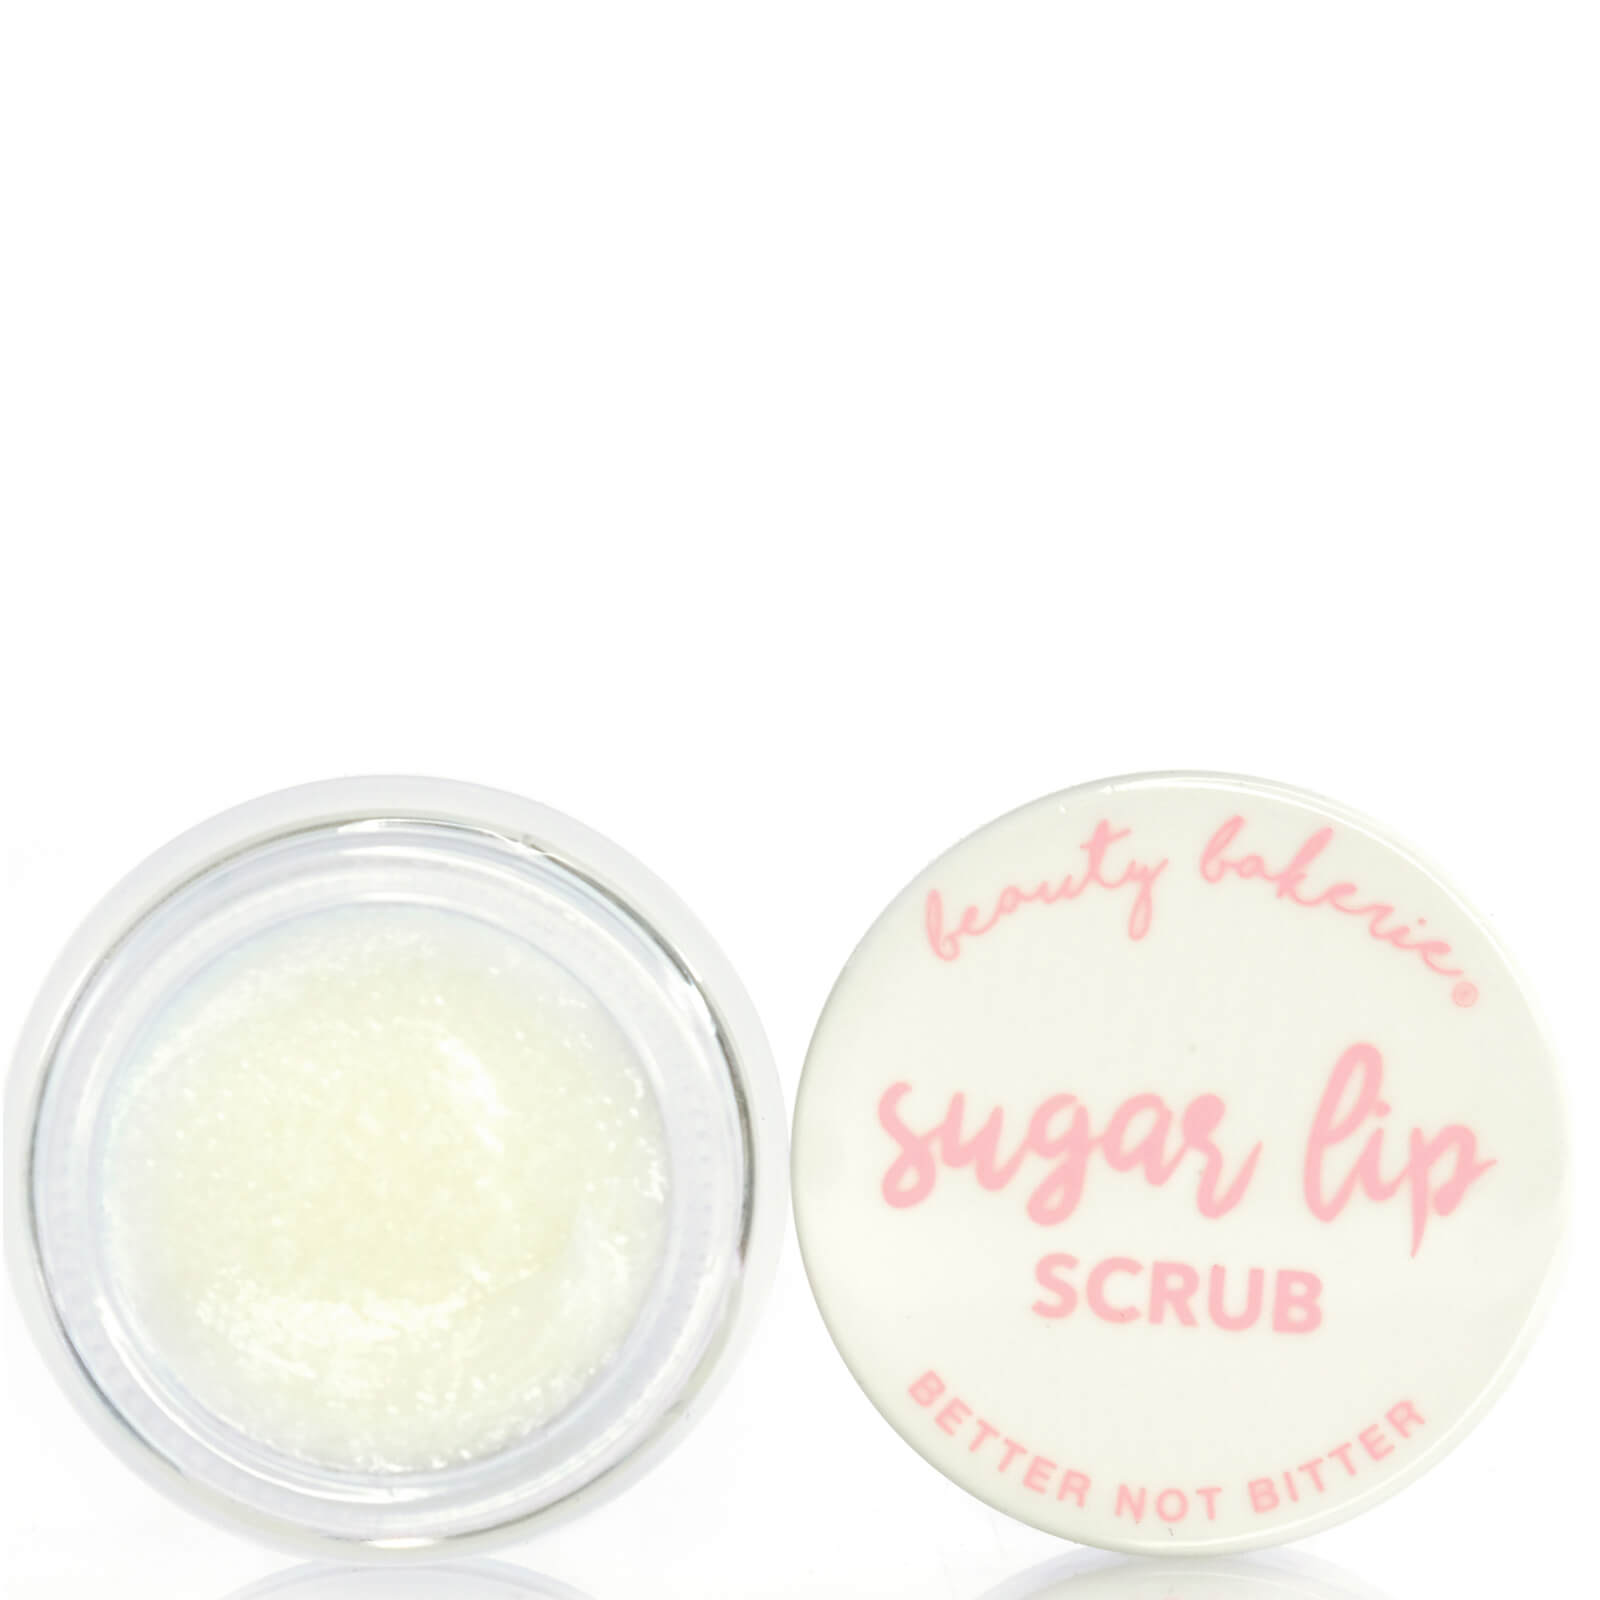 Beauty Bakerie Sugar Lip Scrub 3g (Various Shades) - Vanilla